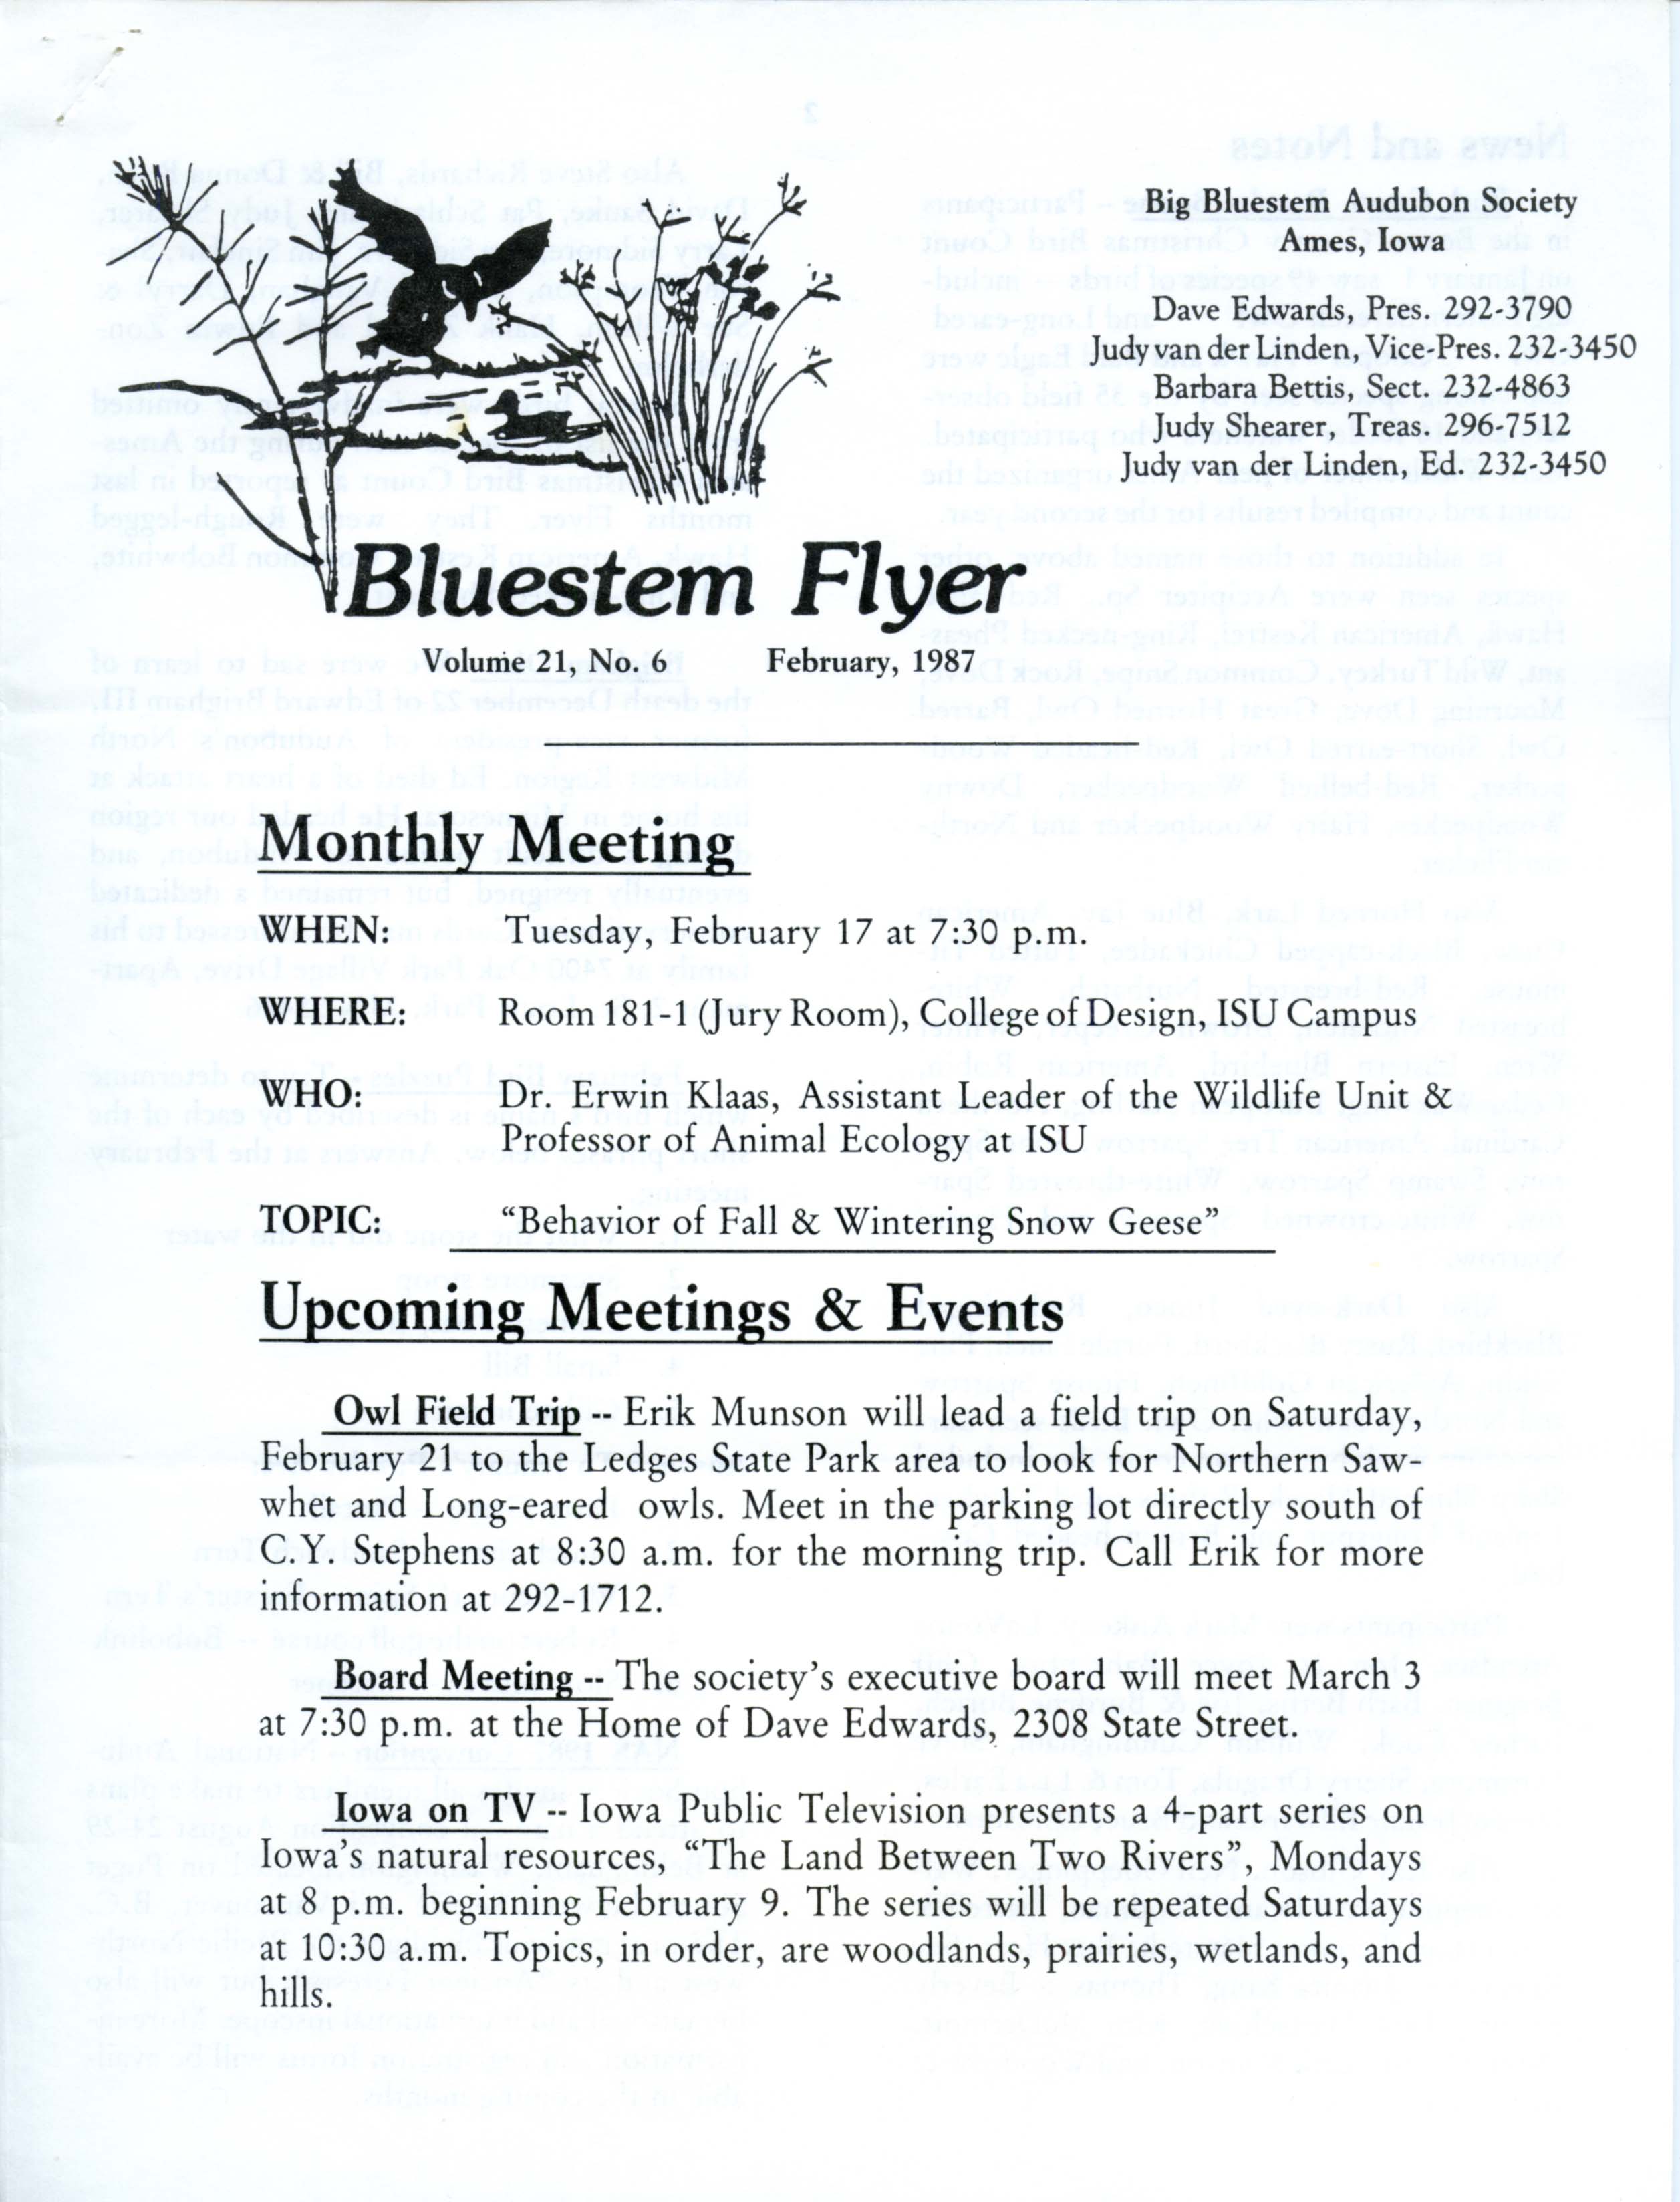 Bluestem Flyer, Volume 21, Number 6, February 1987 